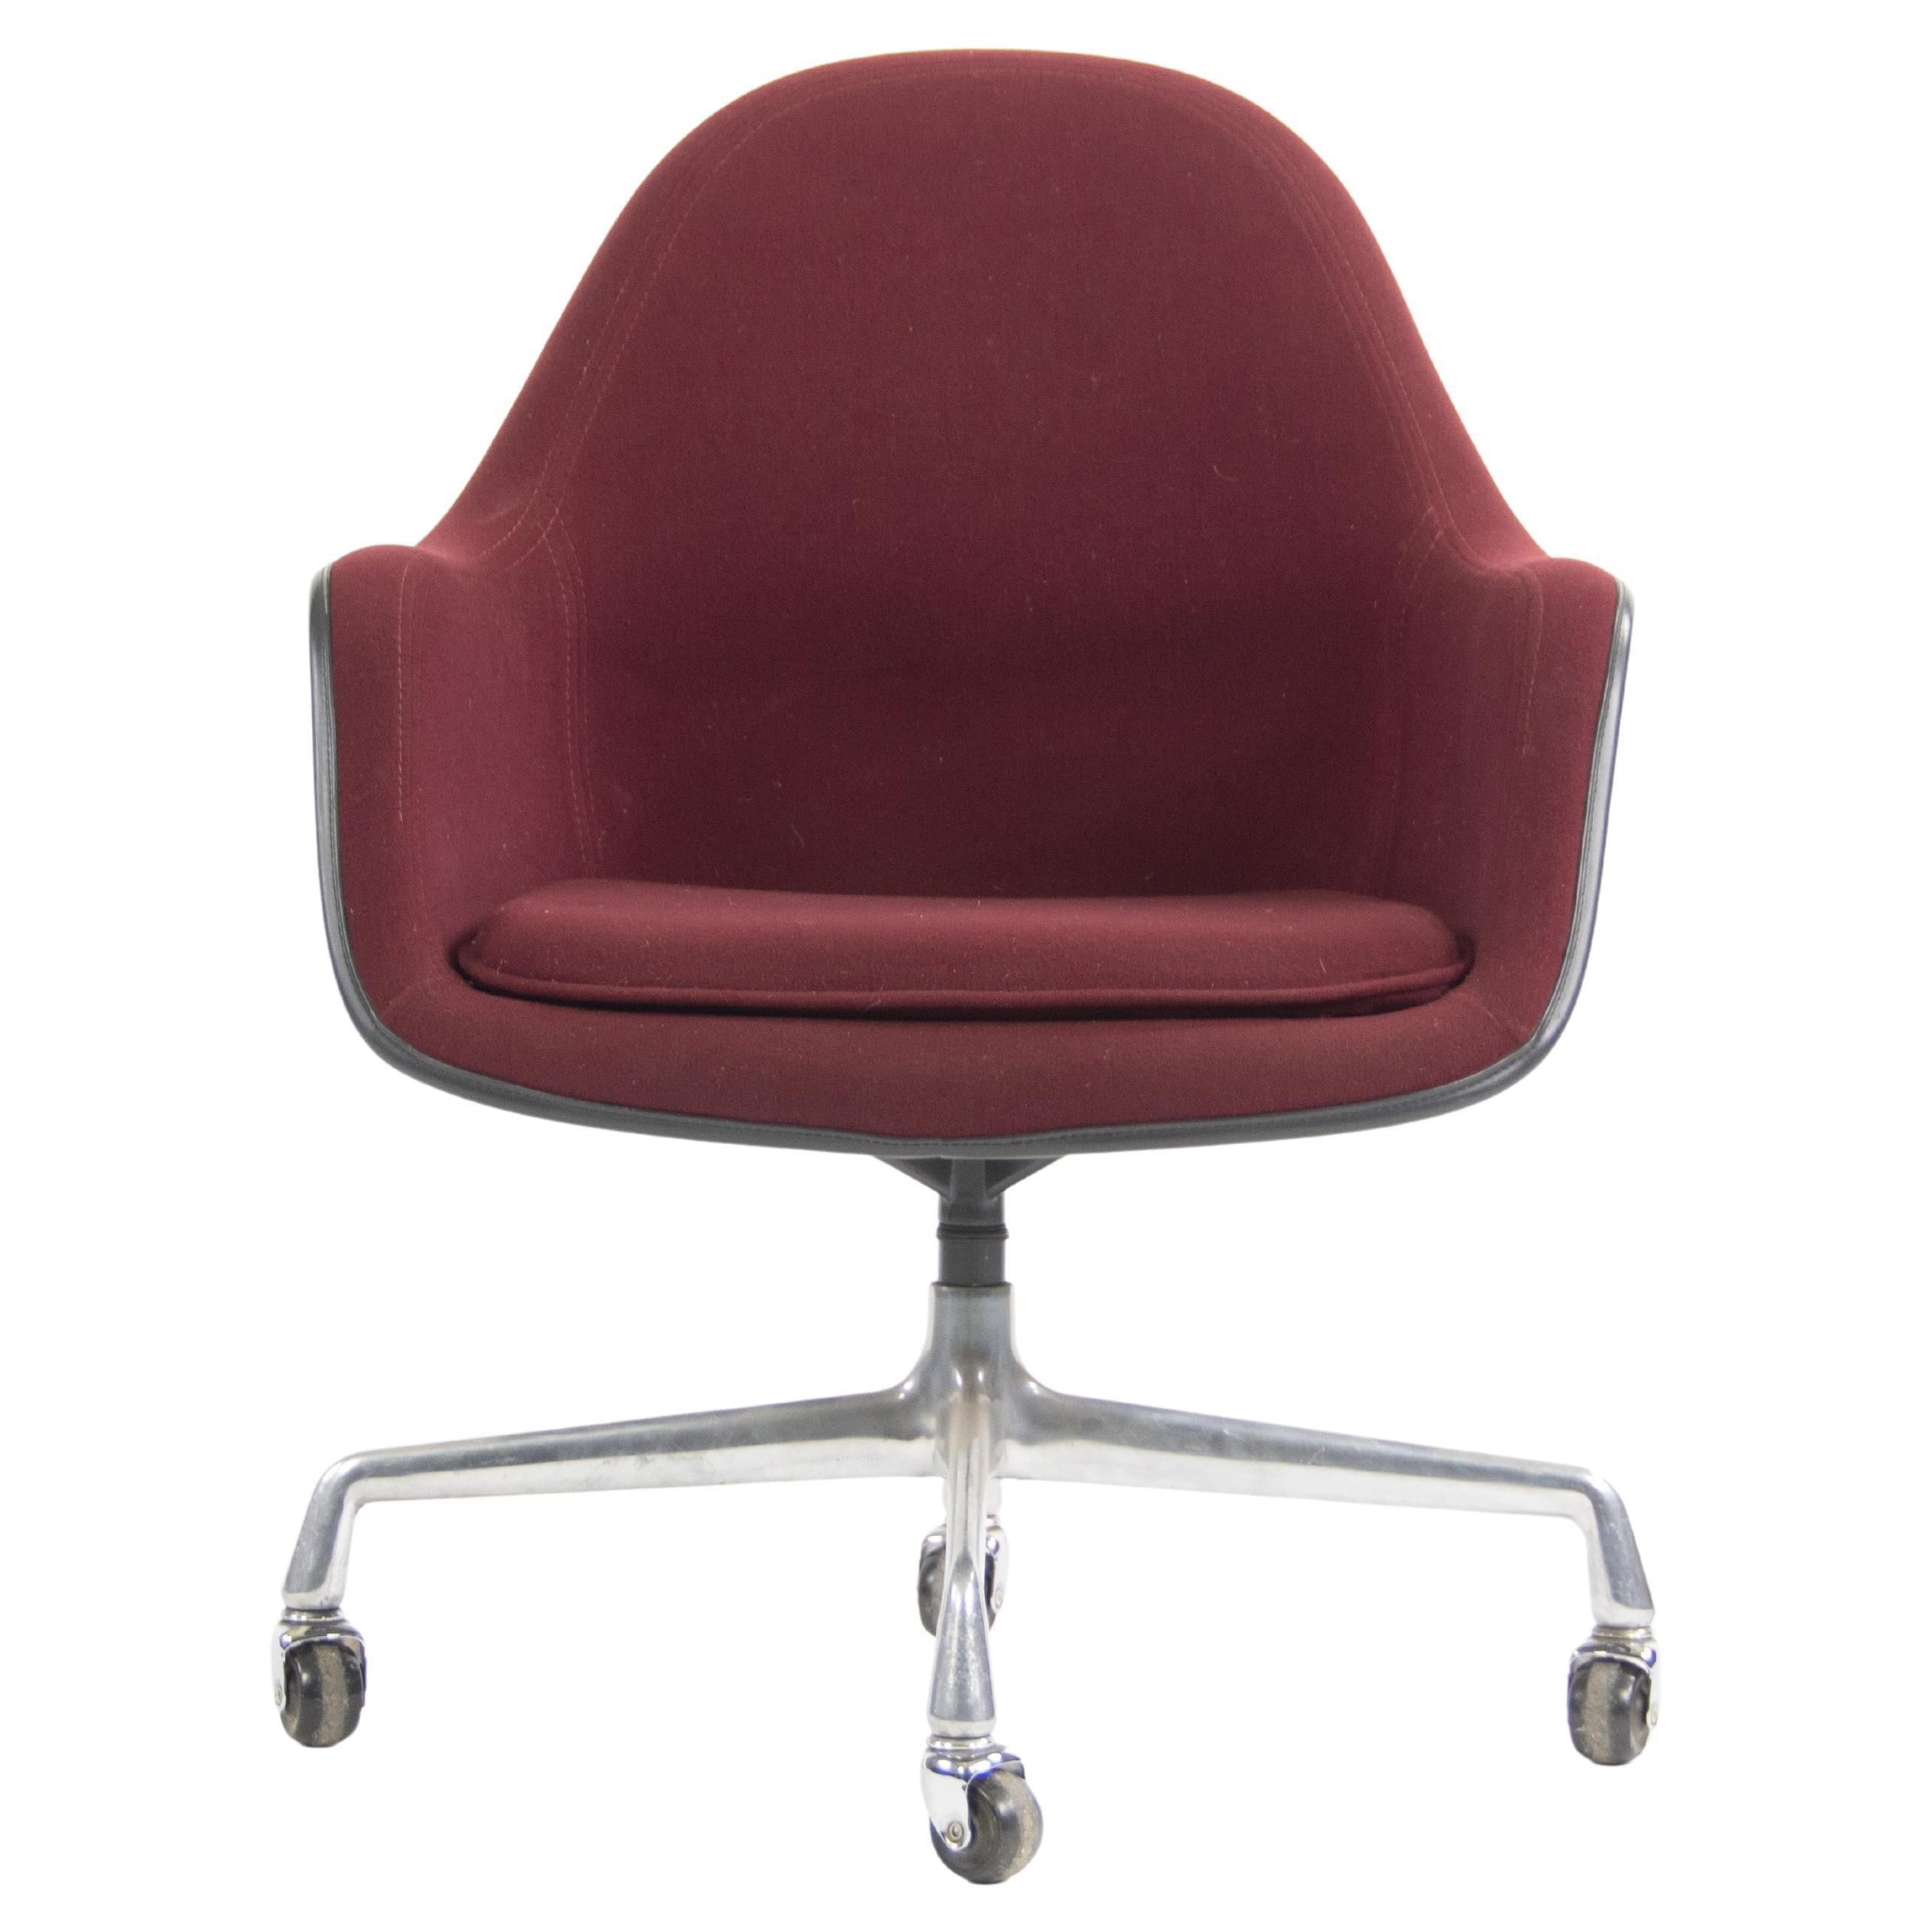 1985 Eames Herman Miller EC175 Upholstered Fiberglass Shell Chair Museum Quality For Sale